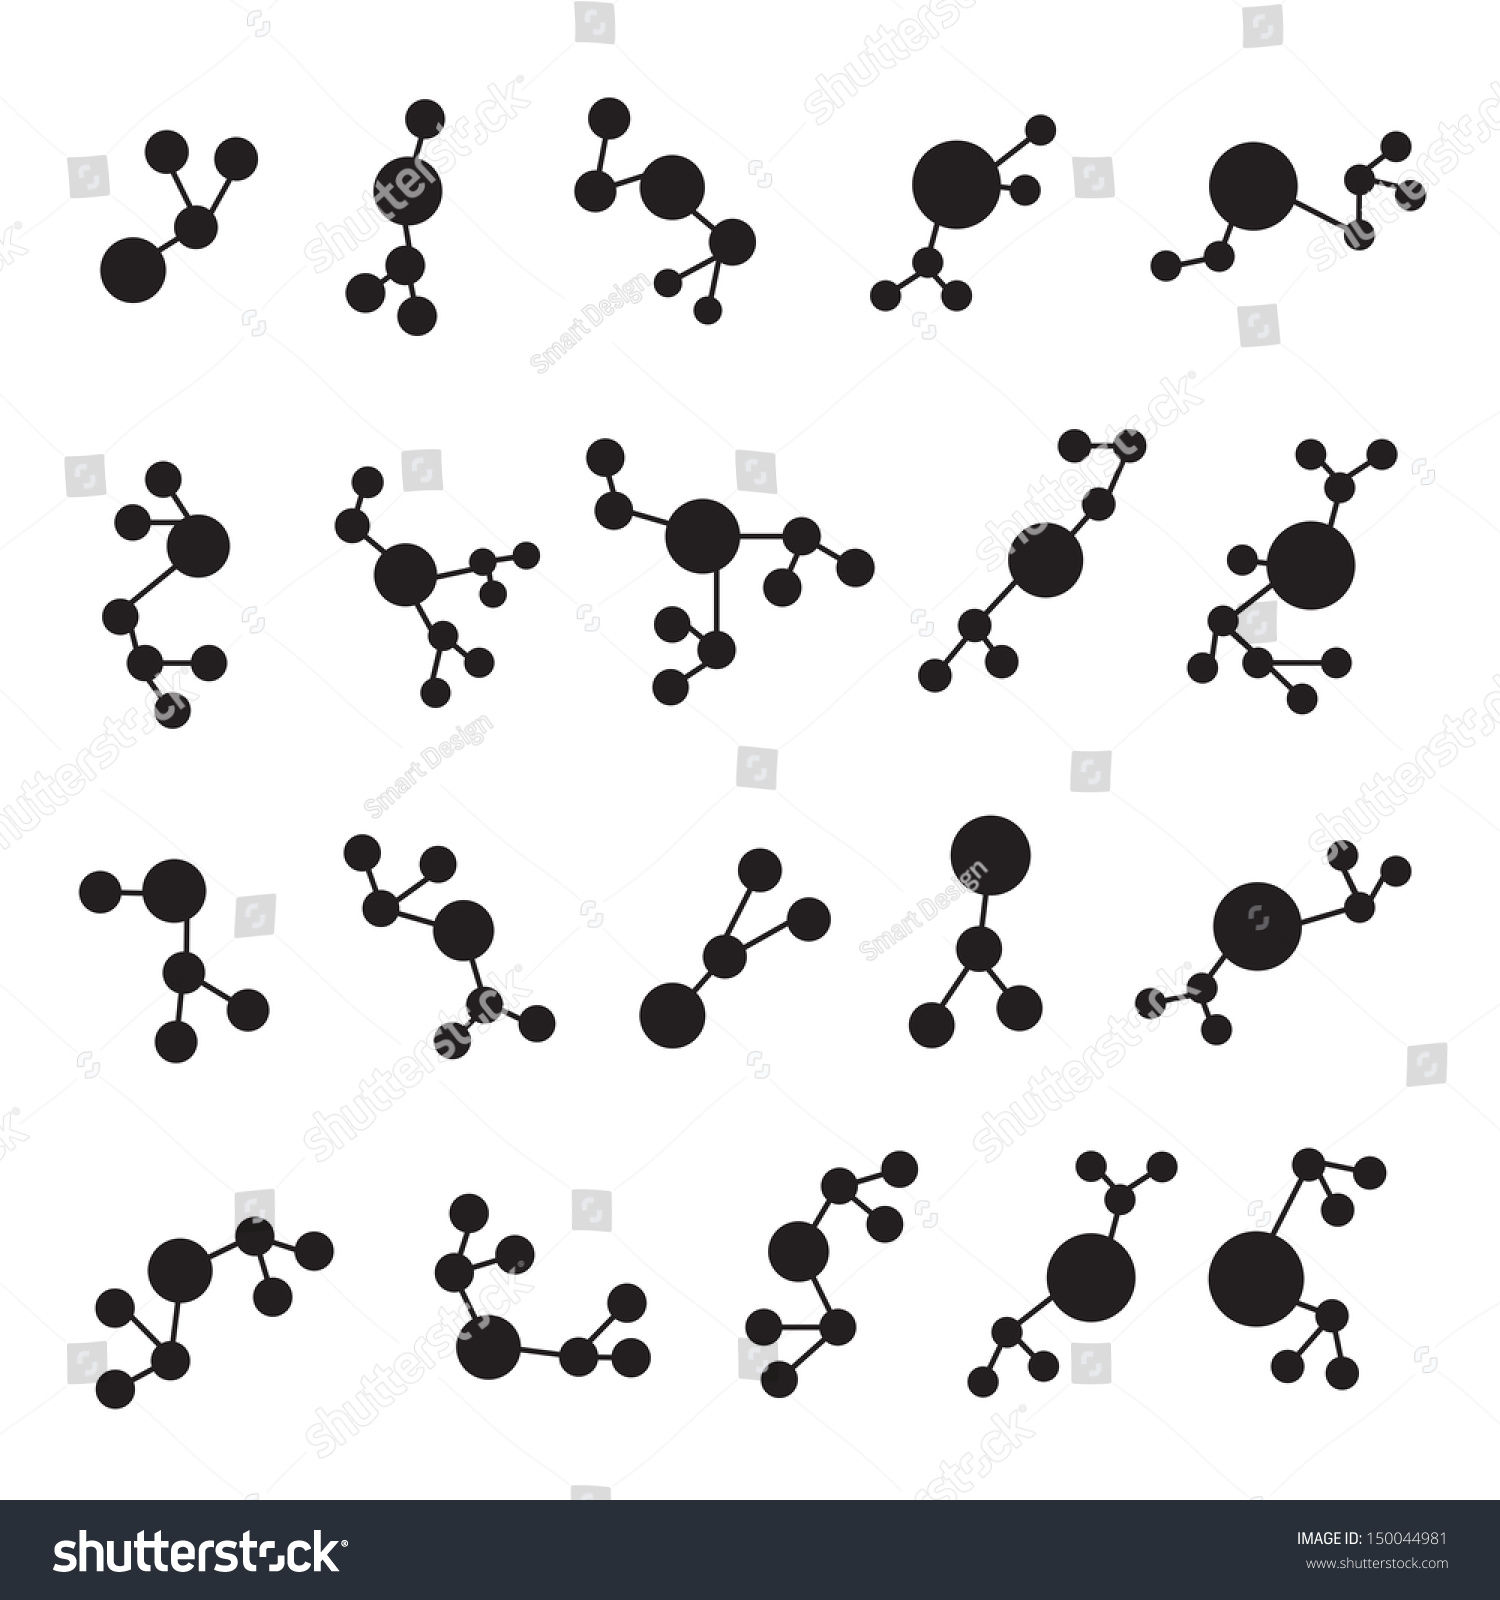 Molecule Icons Set - Isolated On White Background - Vector Illustration ...